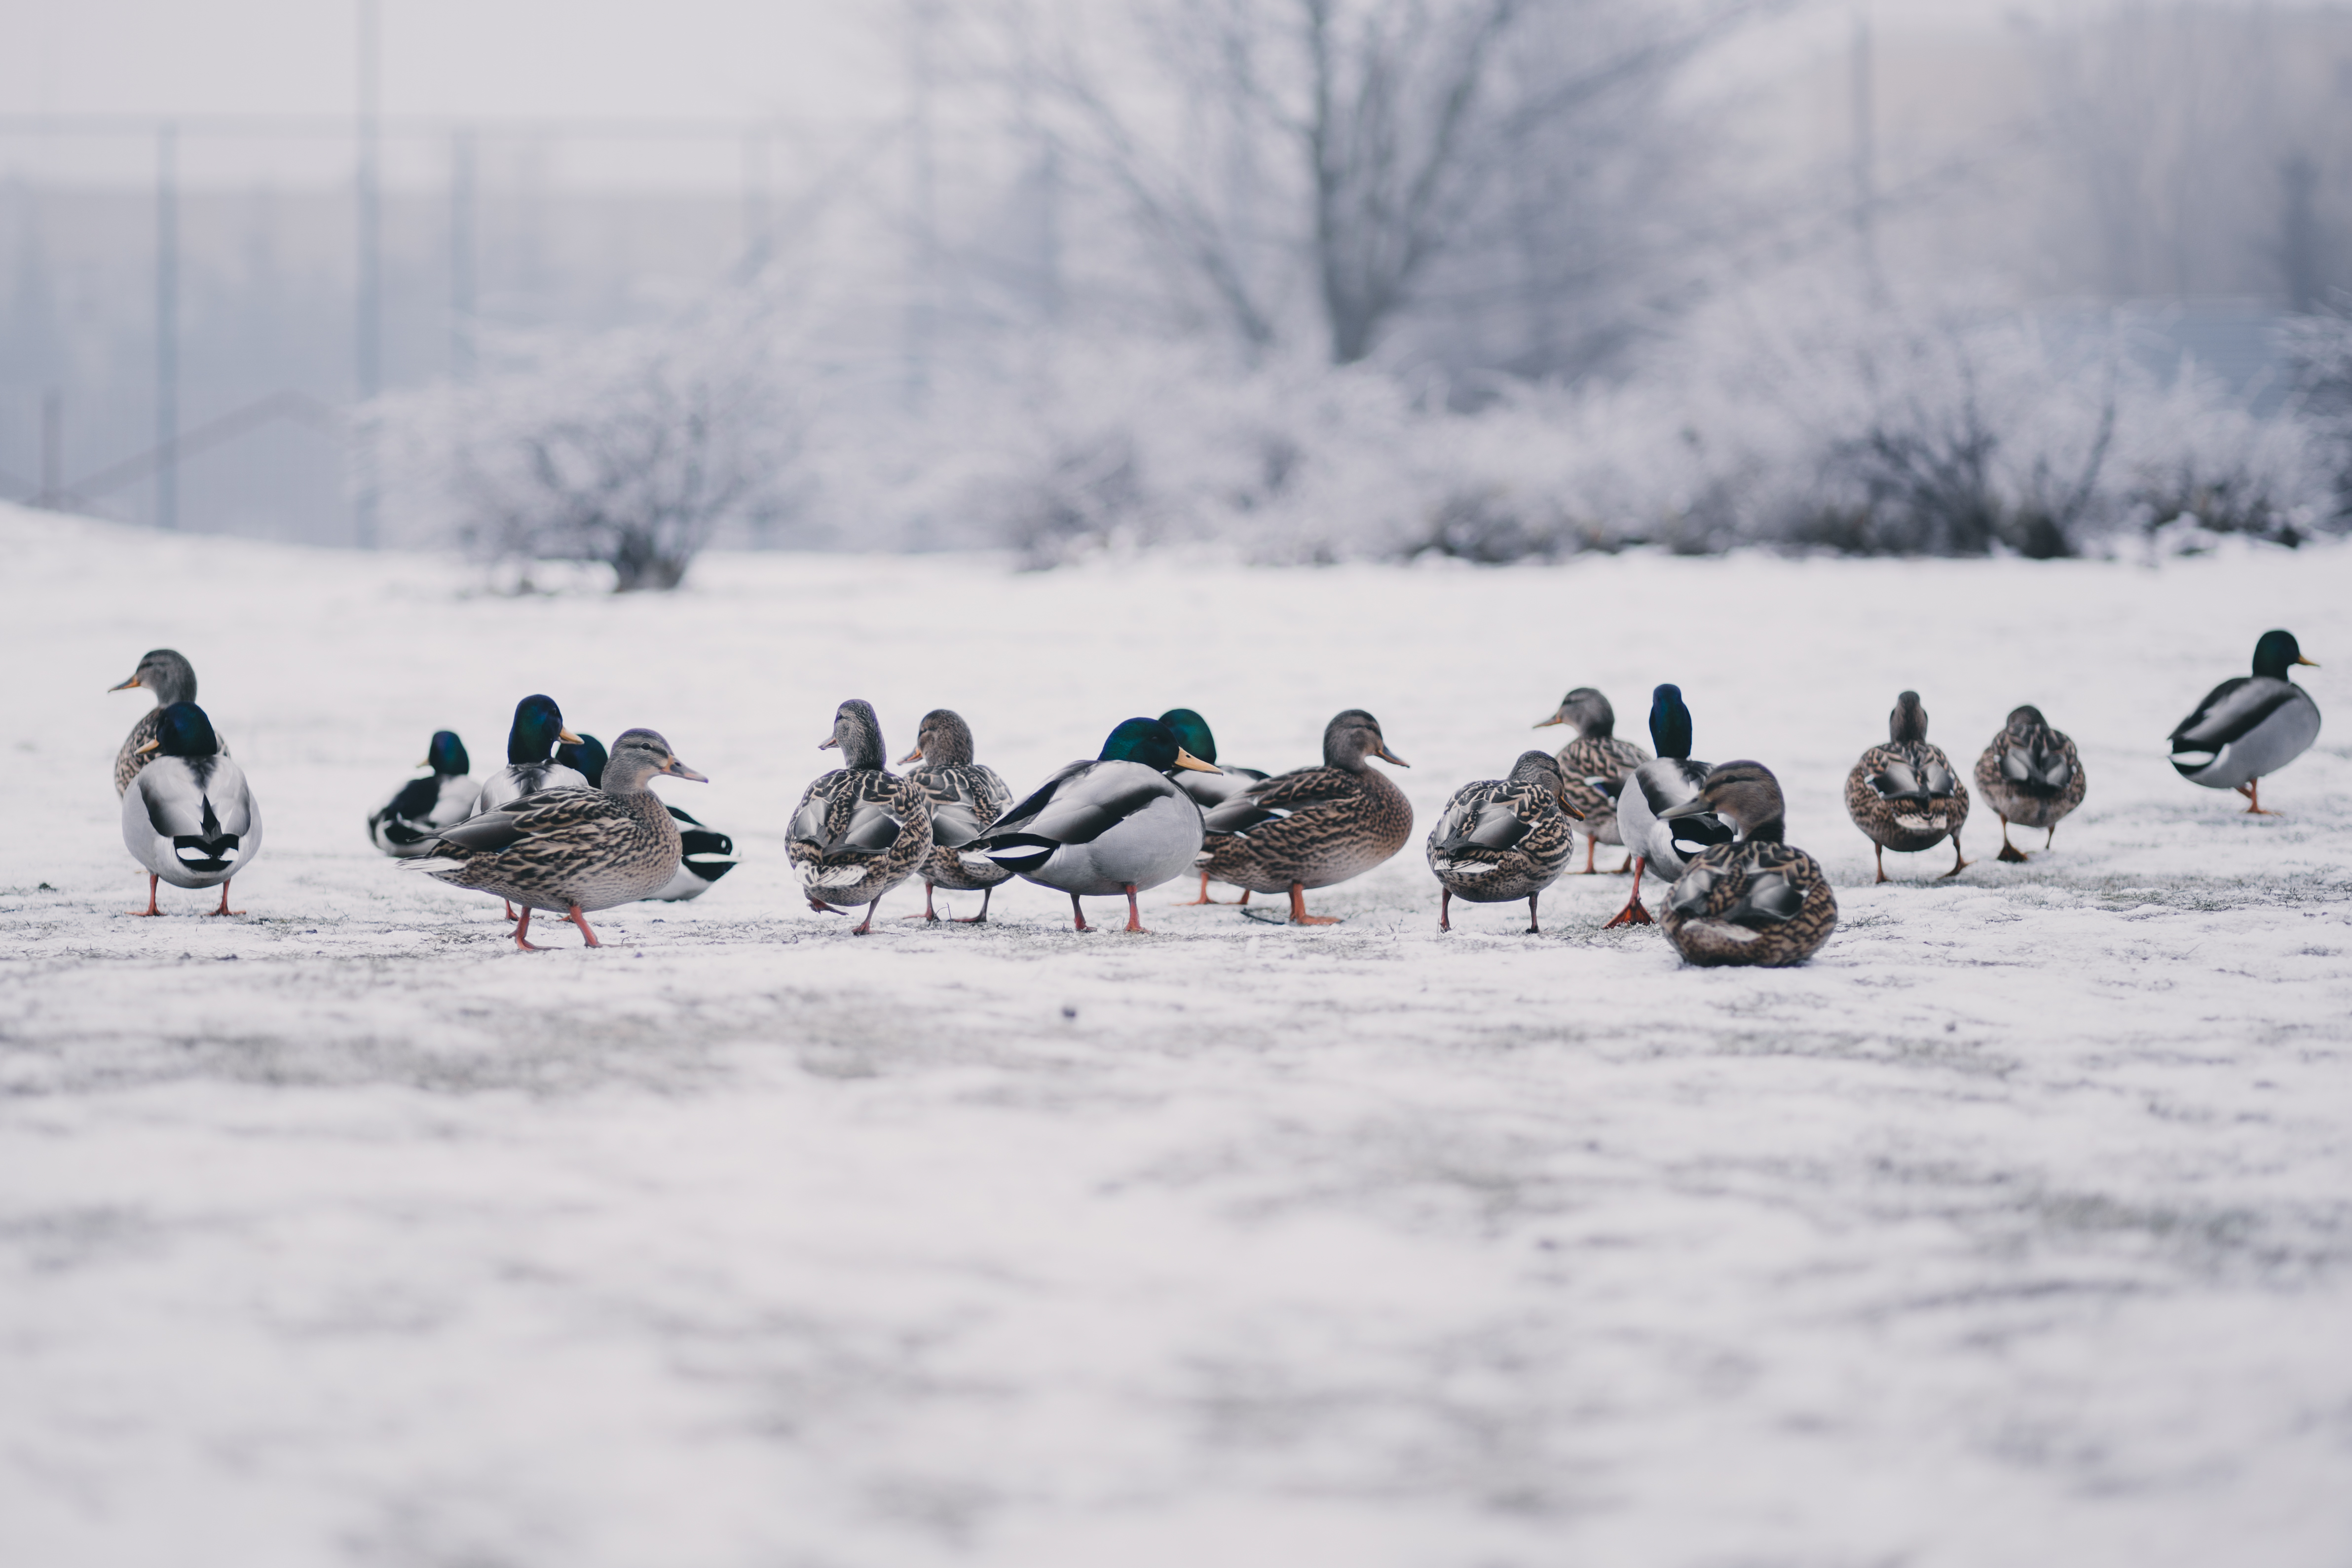 Wild ducks in winter - freestocks.org - Free stock photo